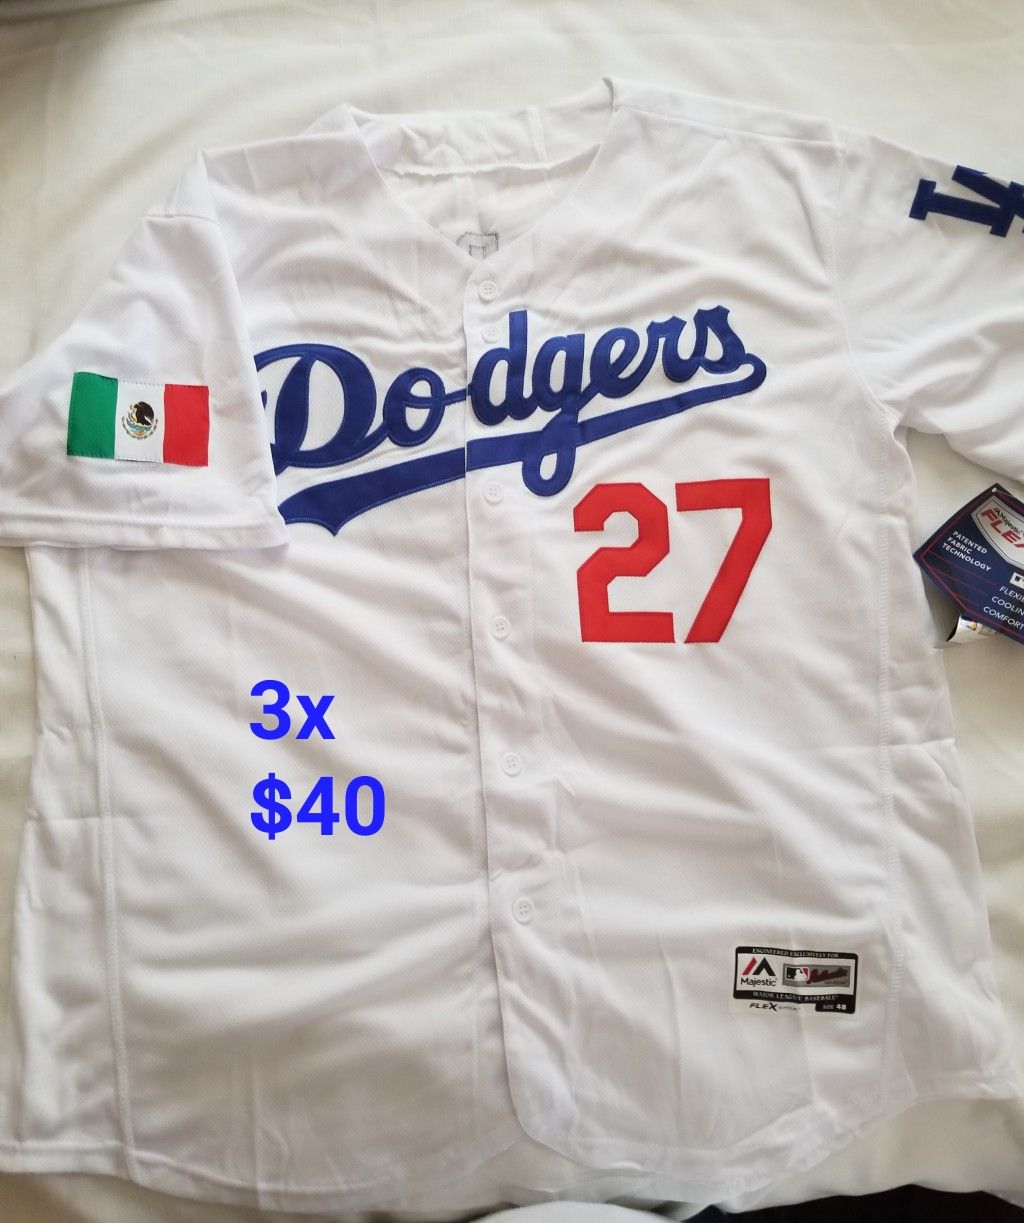 Dodgers Alex verdugo viva mexico edition jersey